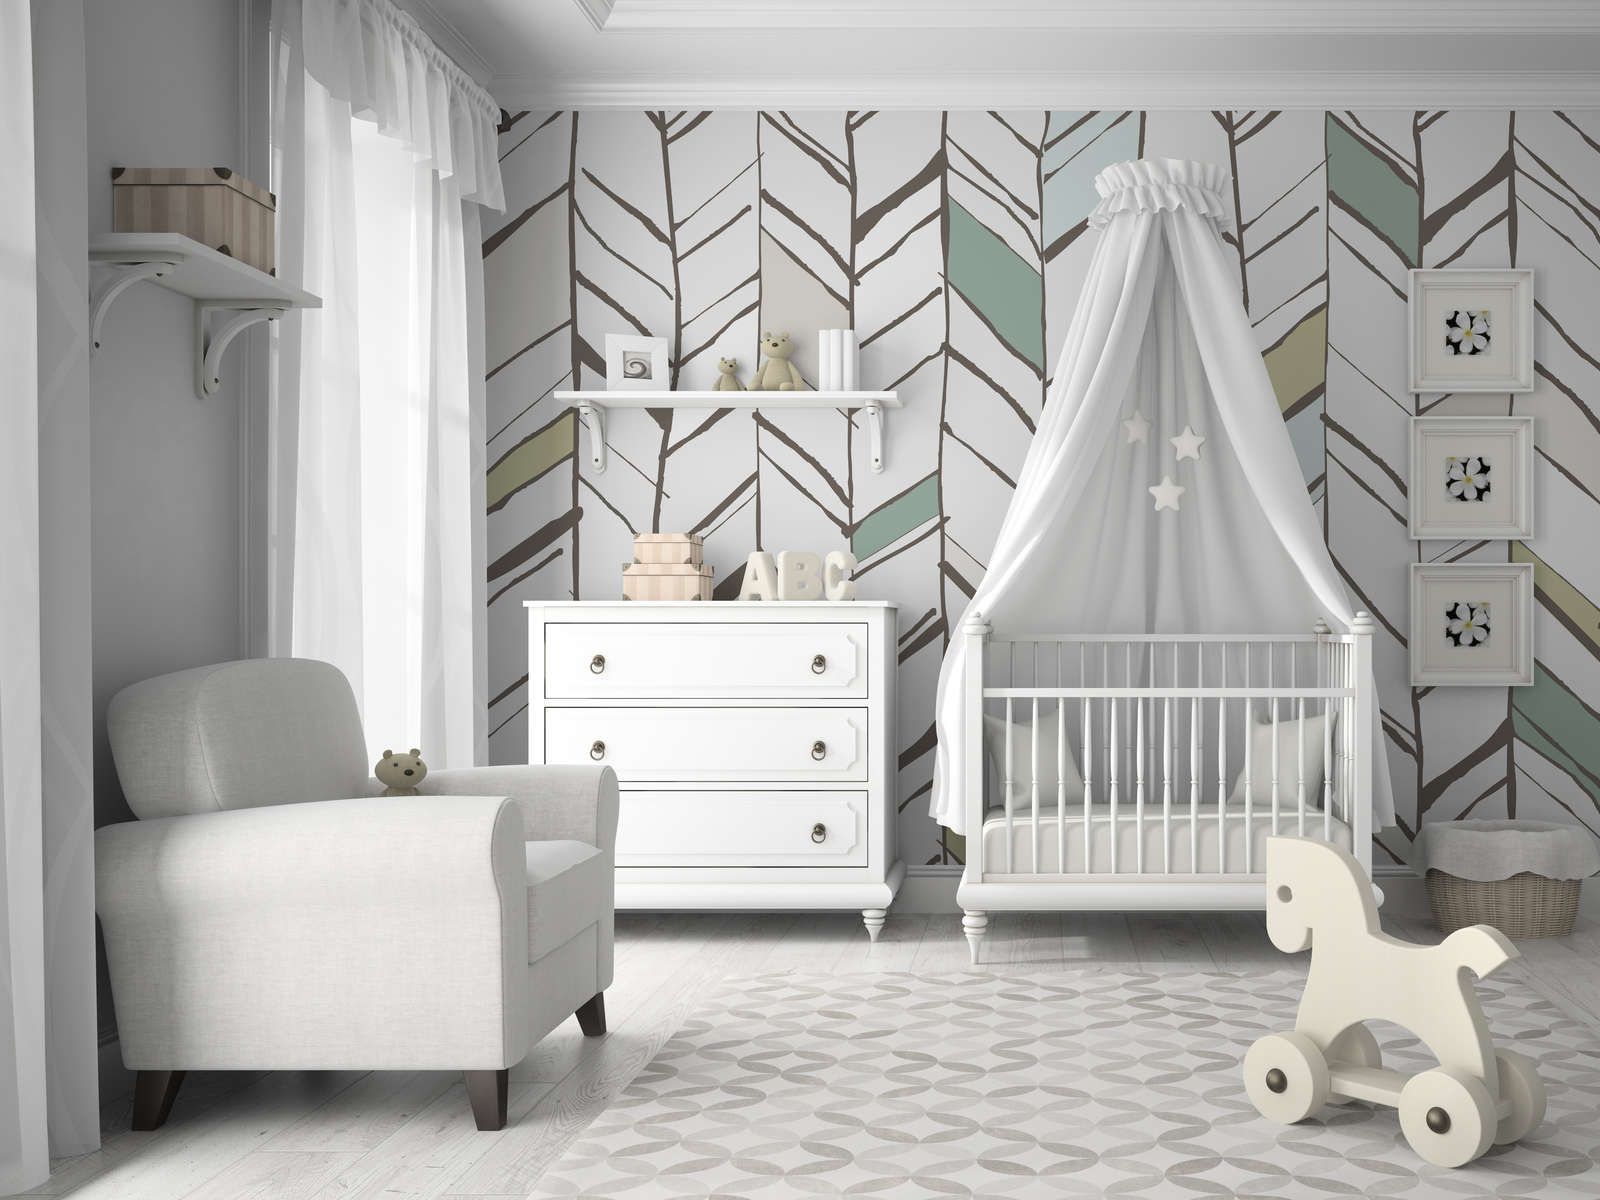             Scandi Style Stripe Wallpaper - Smooth & Light Shiny Non-woven
        